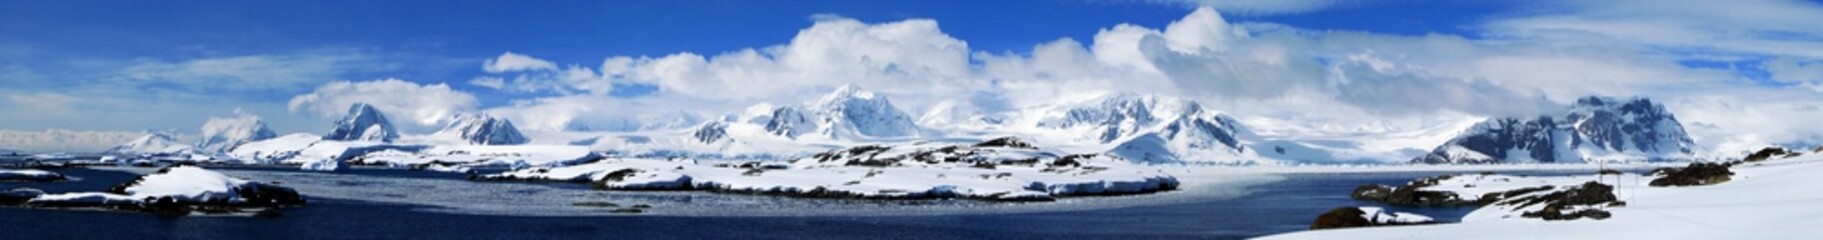 Great panorama view over Pennola Strait near Galindez Island, Vernadsky base in Antarctic